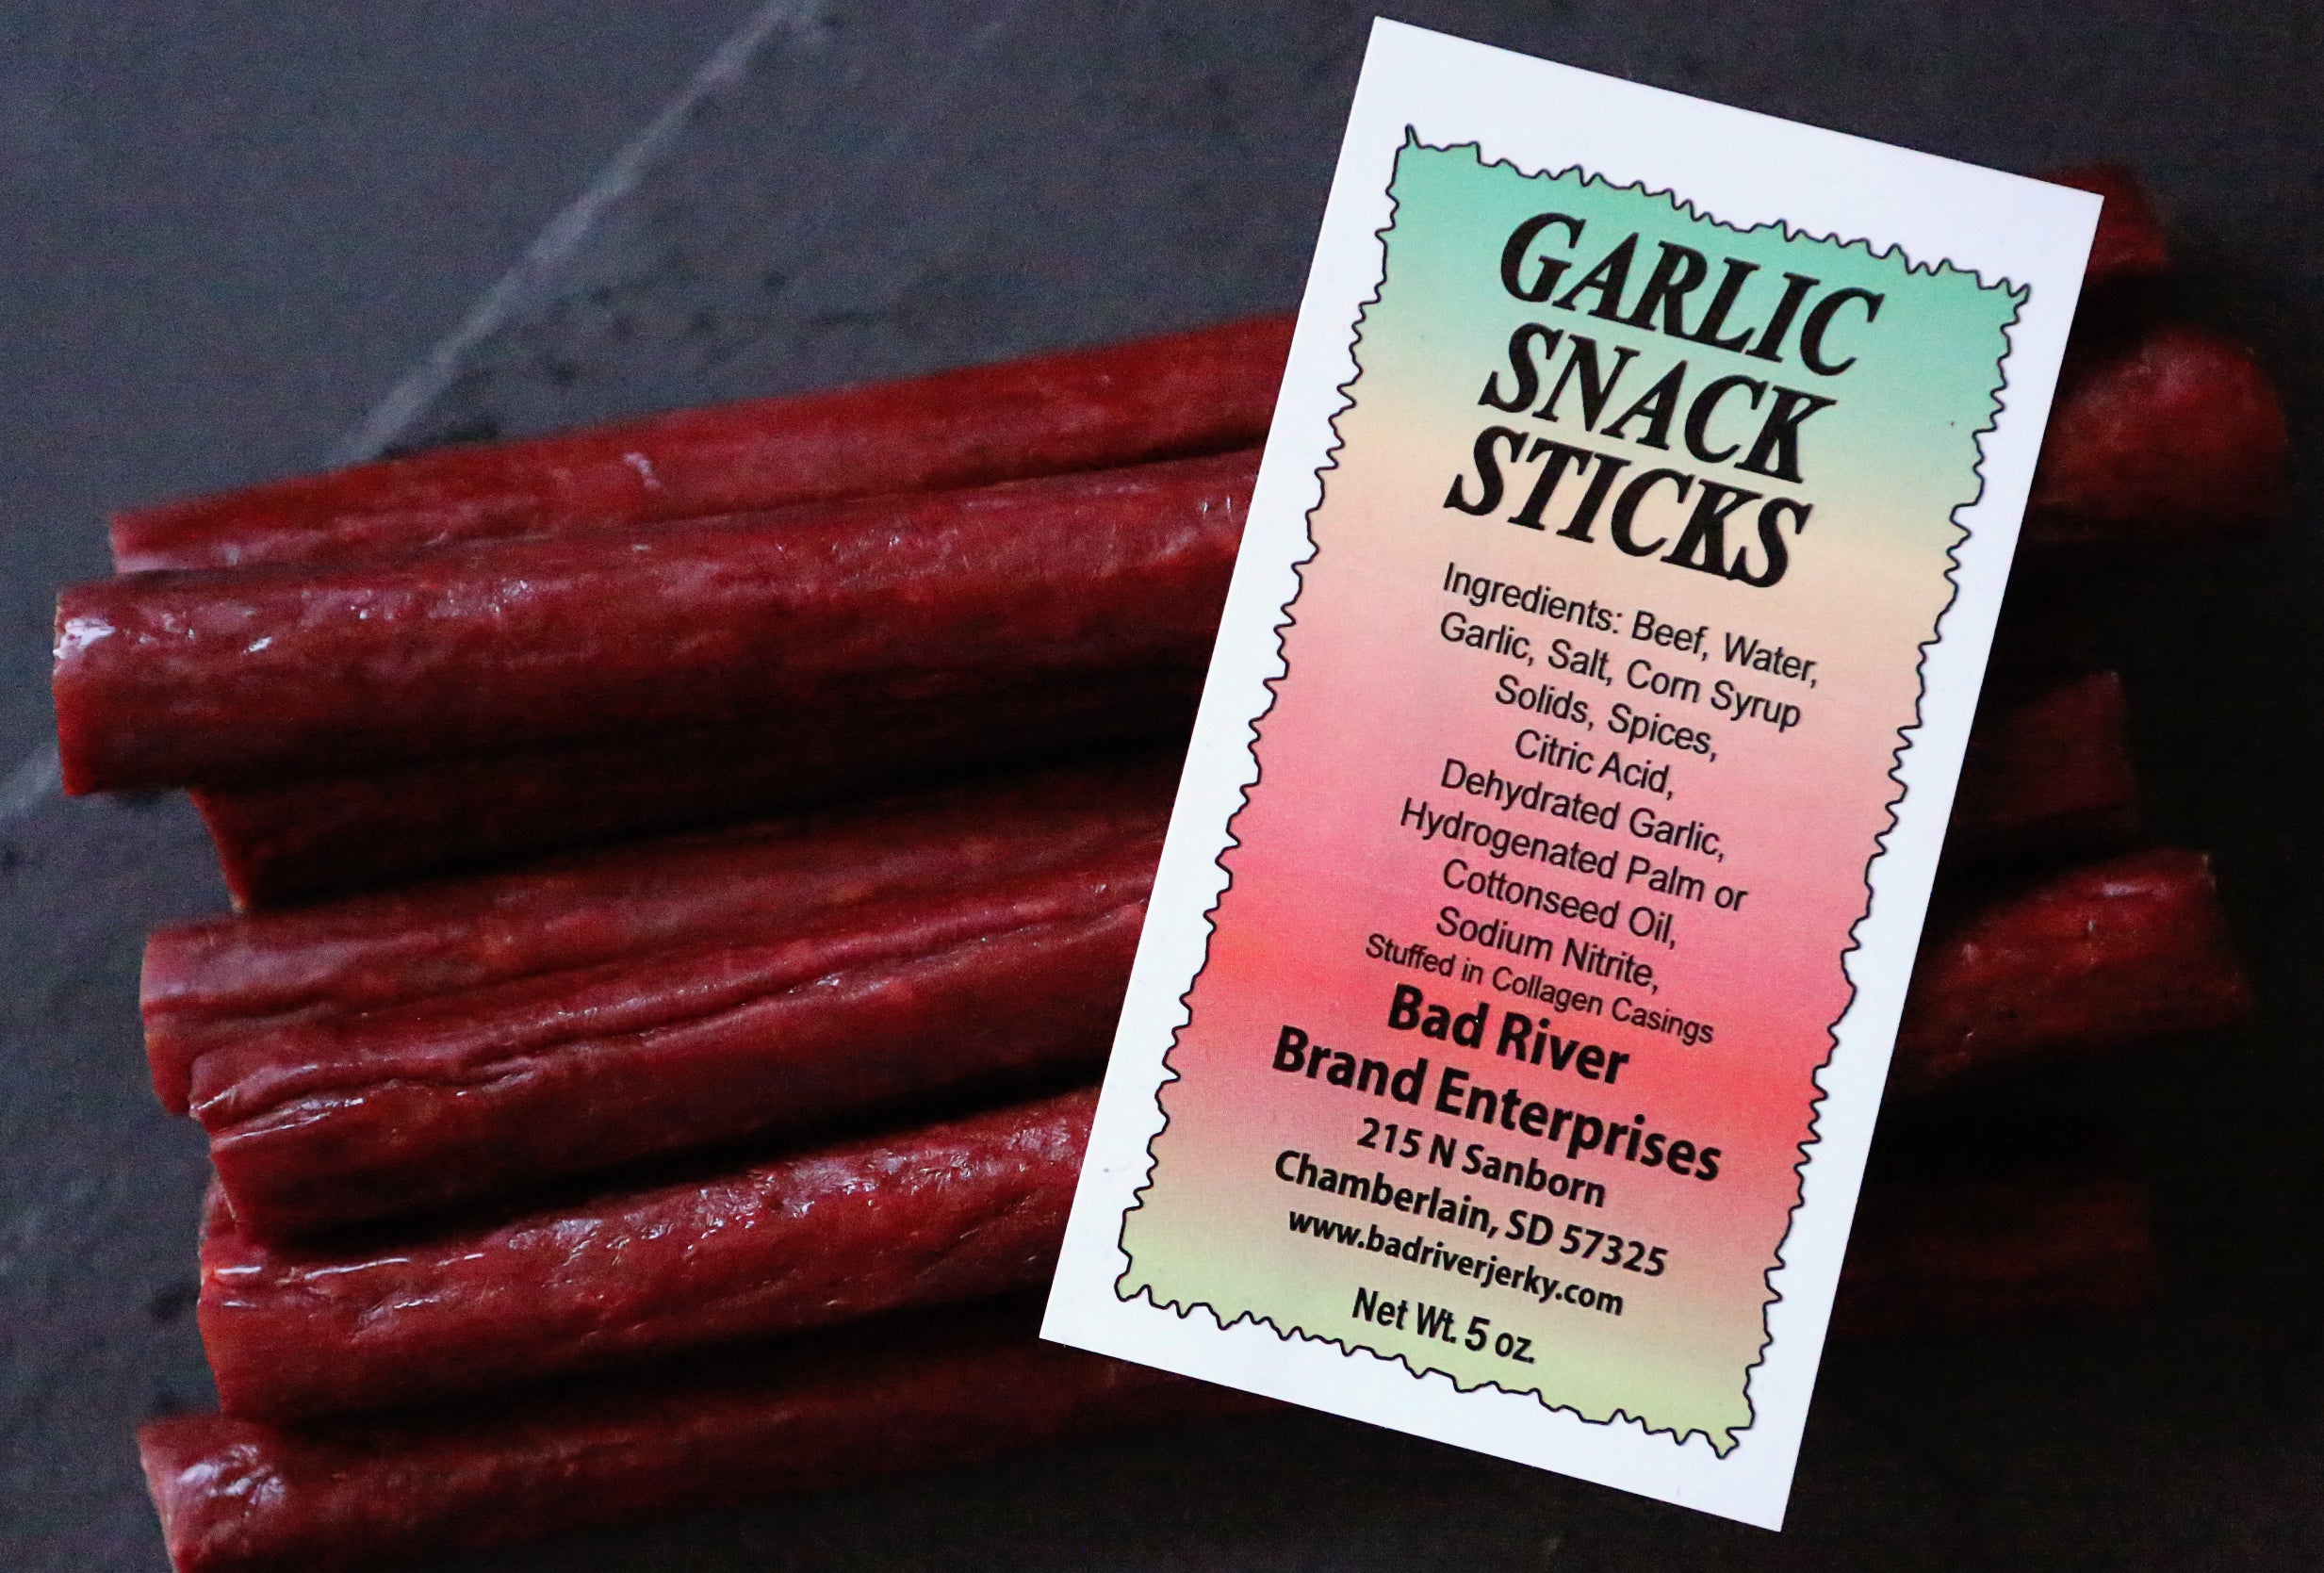 Garlic Snack Sticks